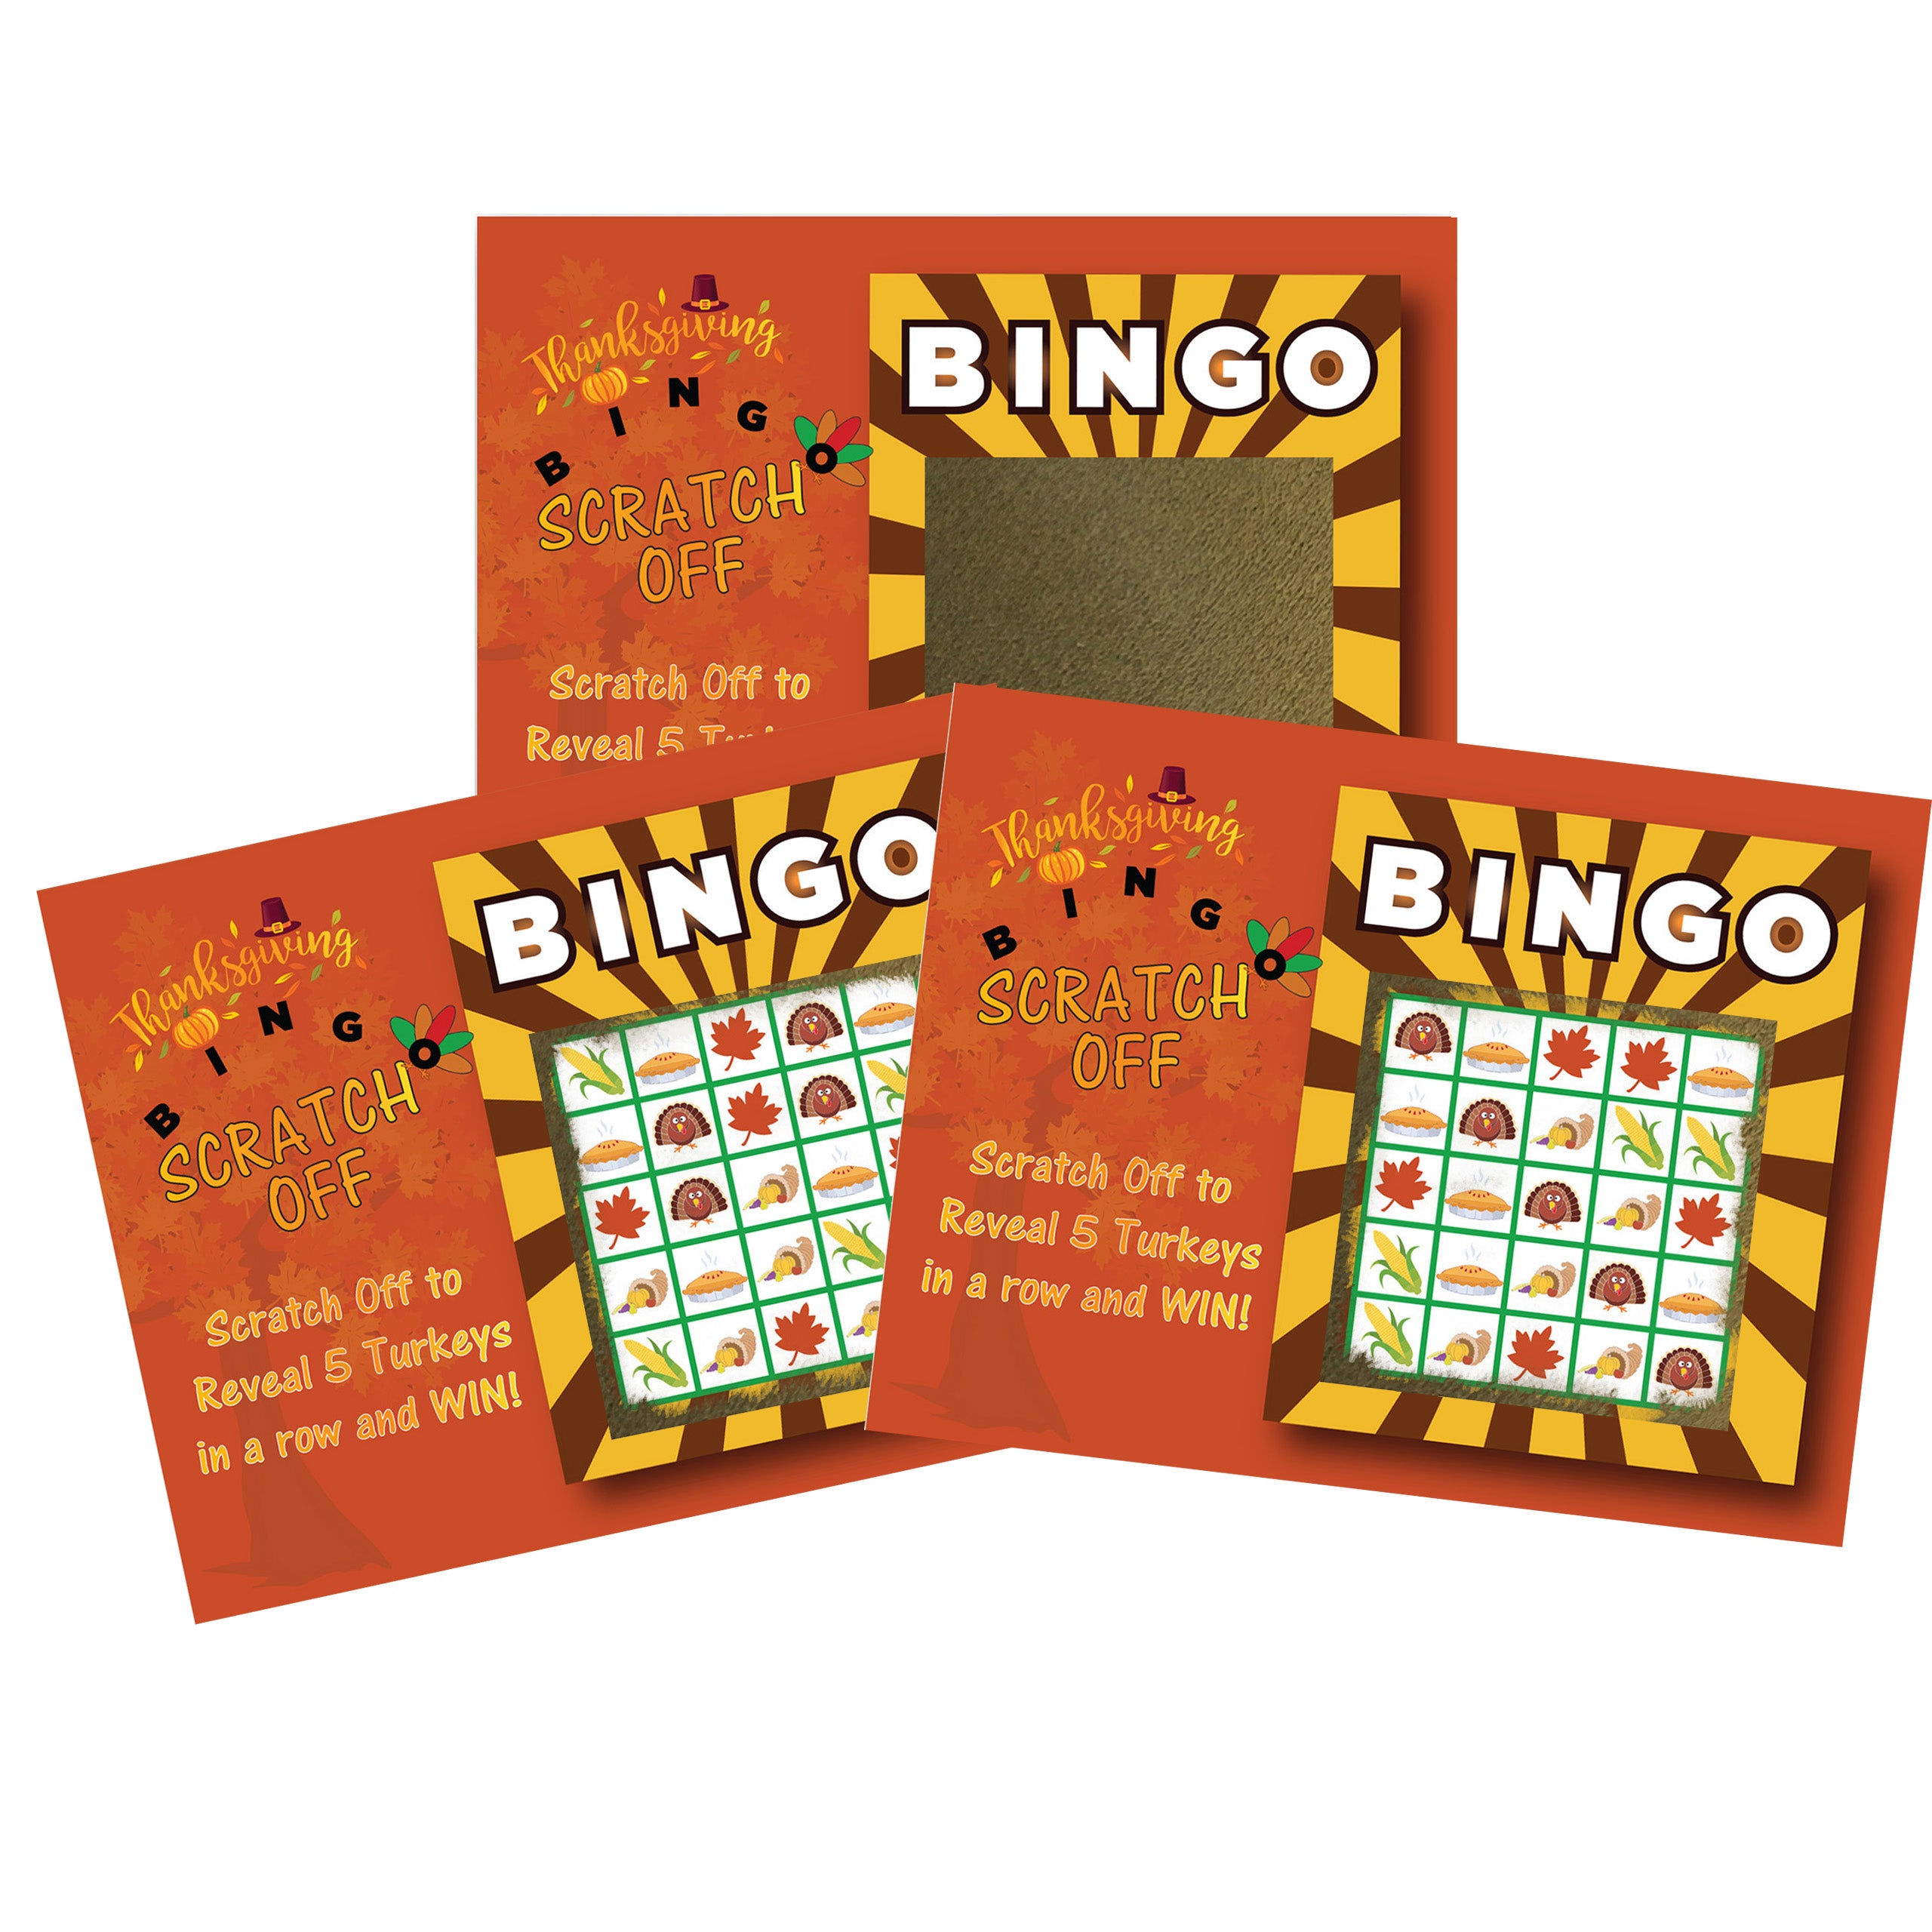 Thanksgiving Bingo Reveal 5 Turkeys Scratch Off Game 26 Pack - 2 Bingo and 24 Non-Bingo Cards - My Scratch Offs